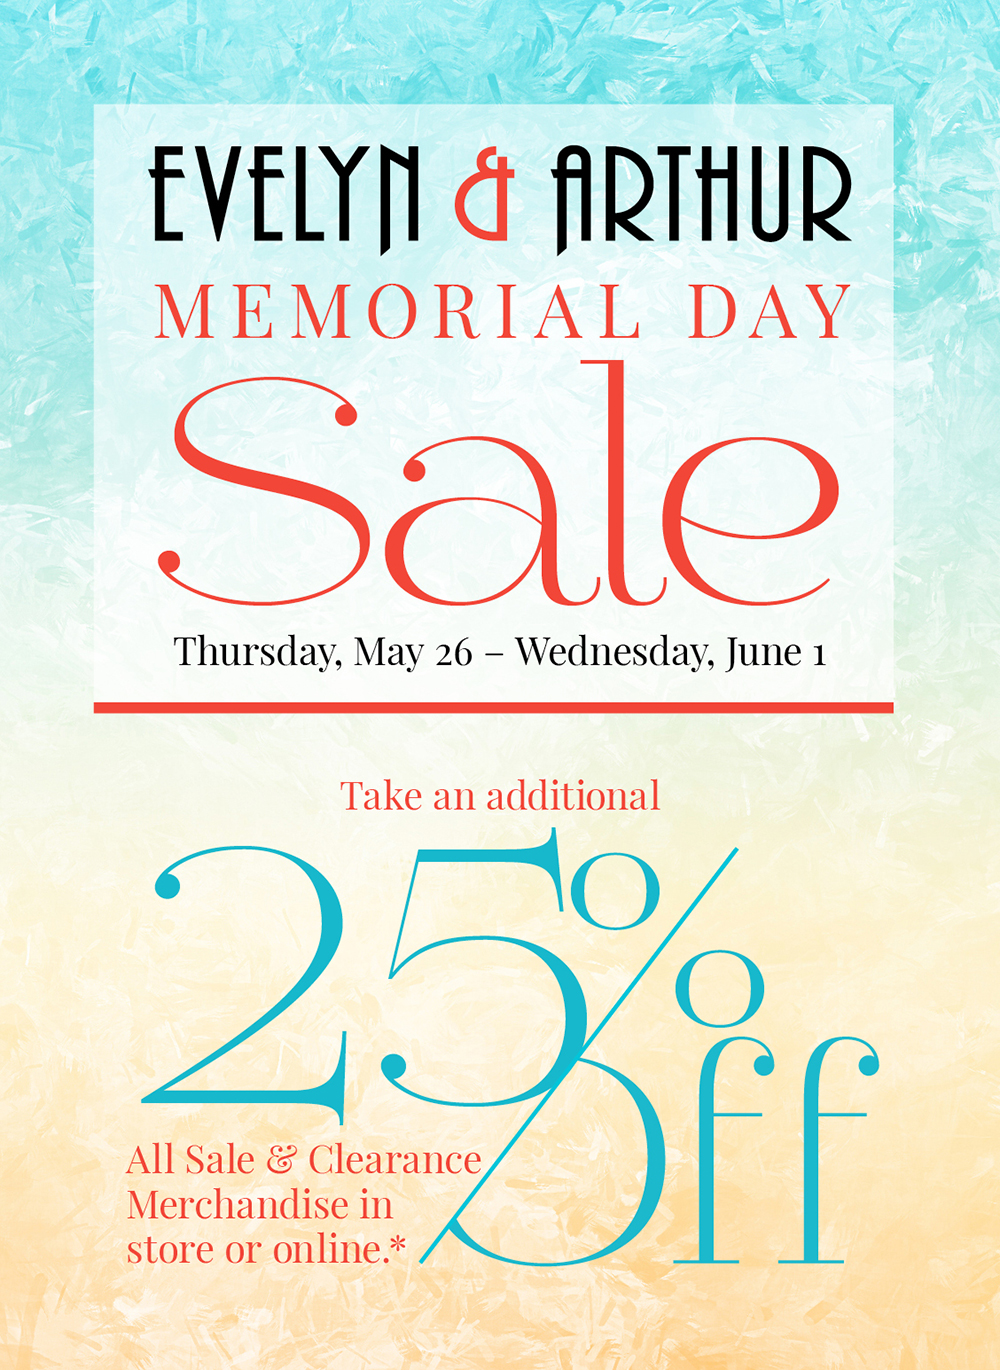 Evelyn & Arthur Memorial Day Sale